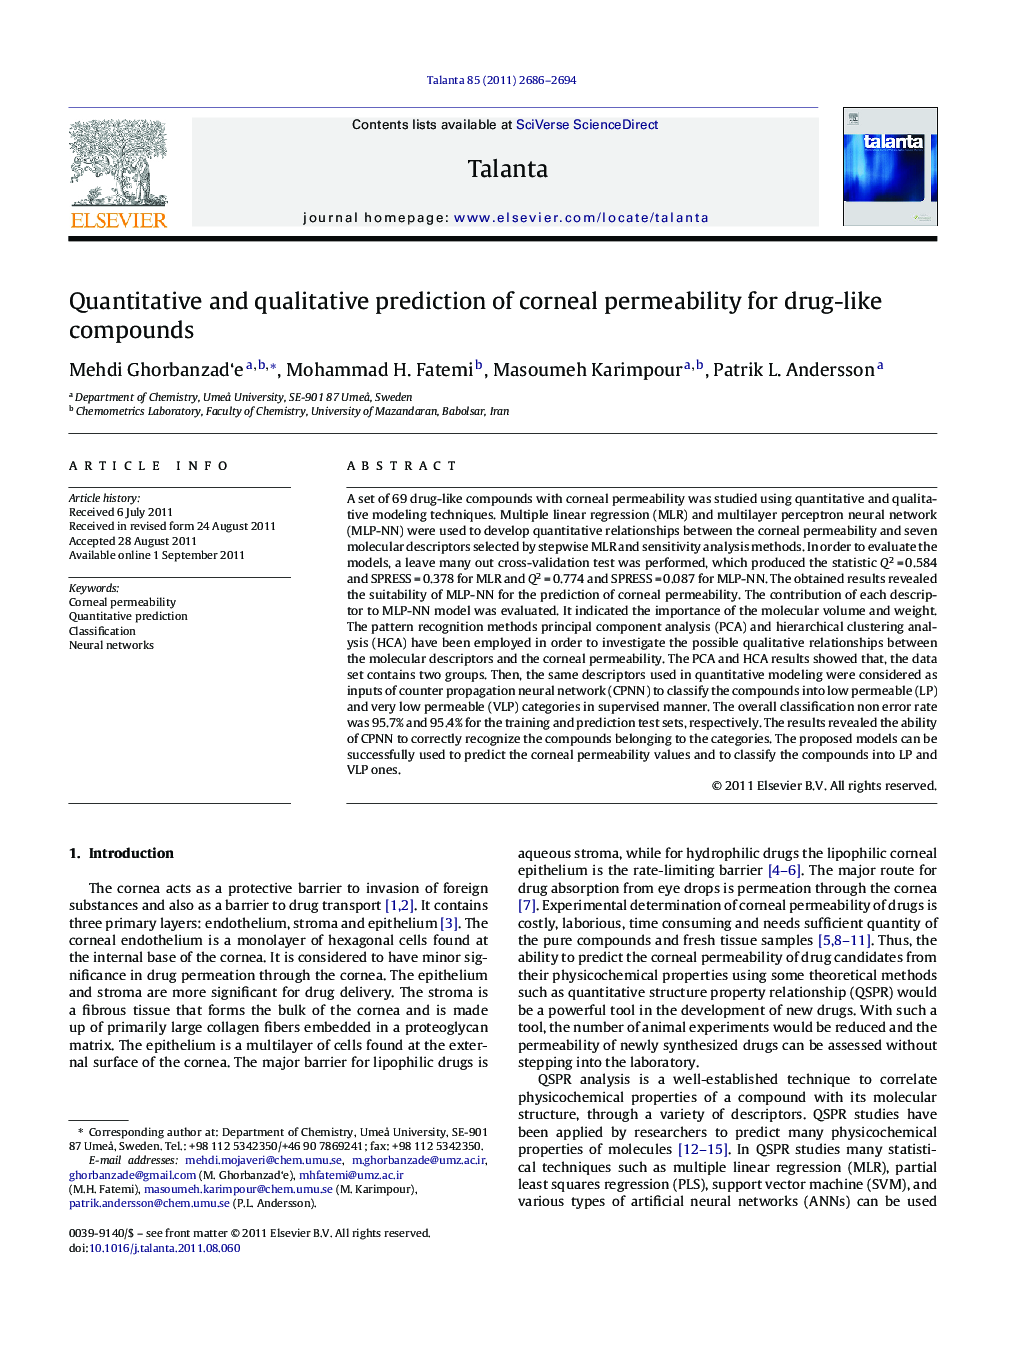 Quantitative and qualitative prediction of corneal permeability for drug-like compounds